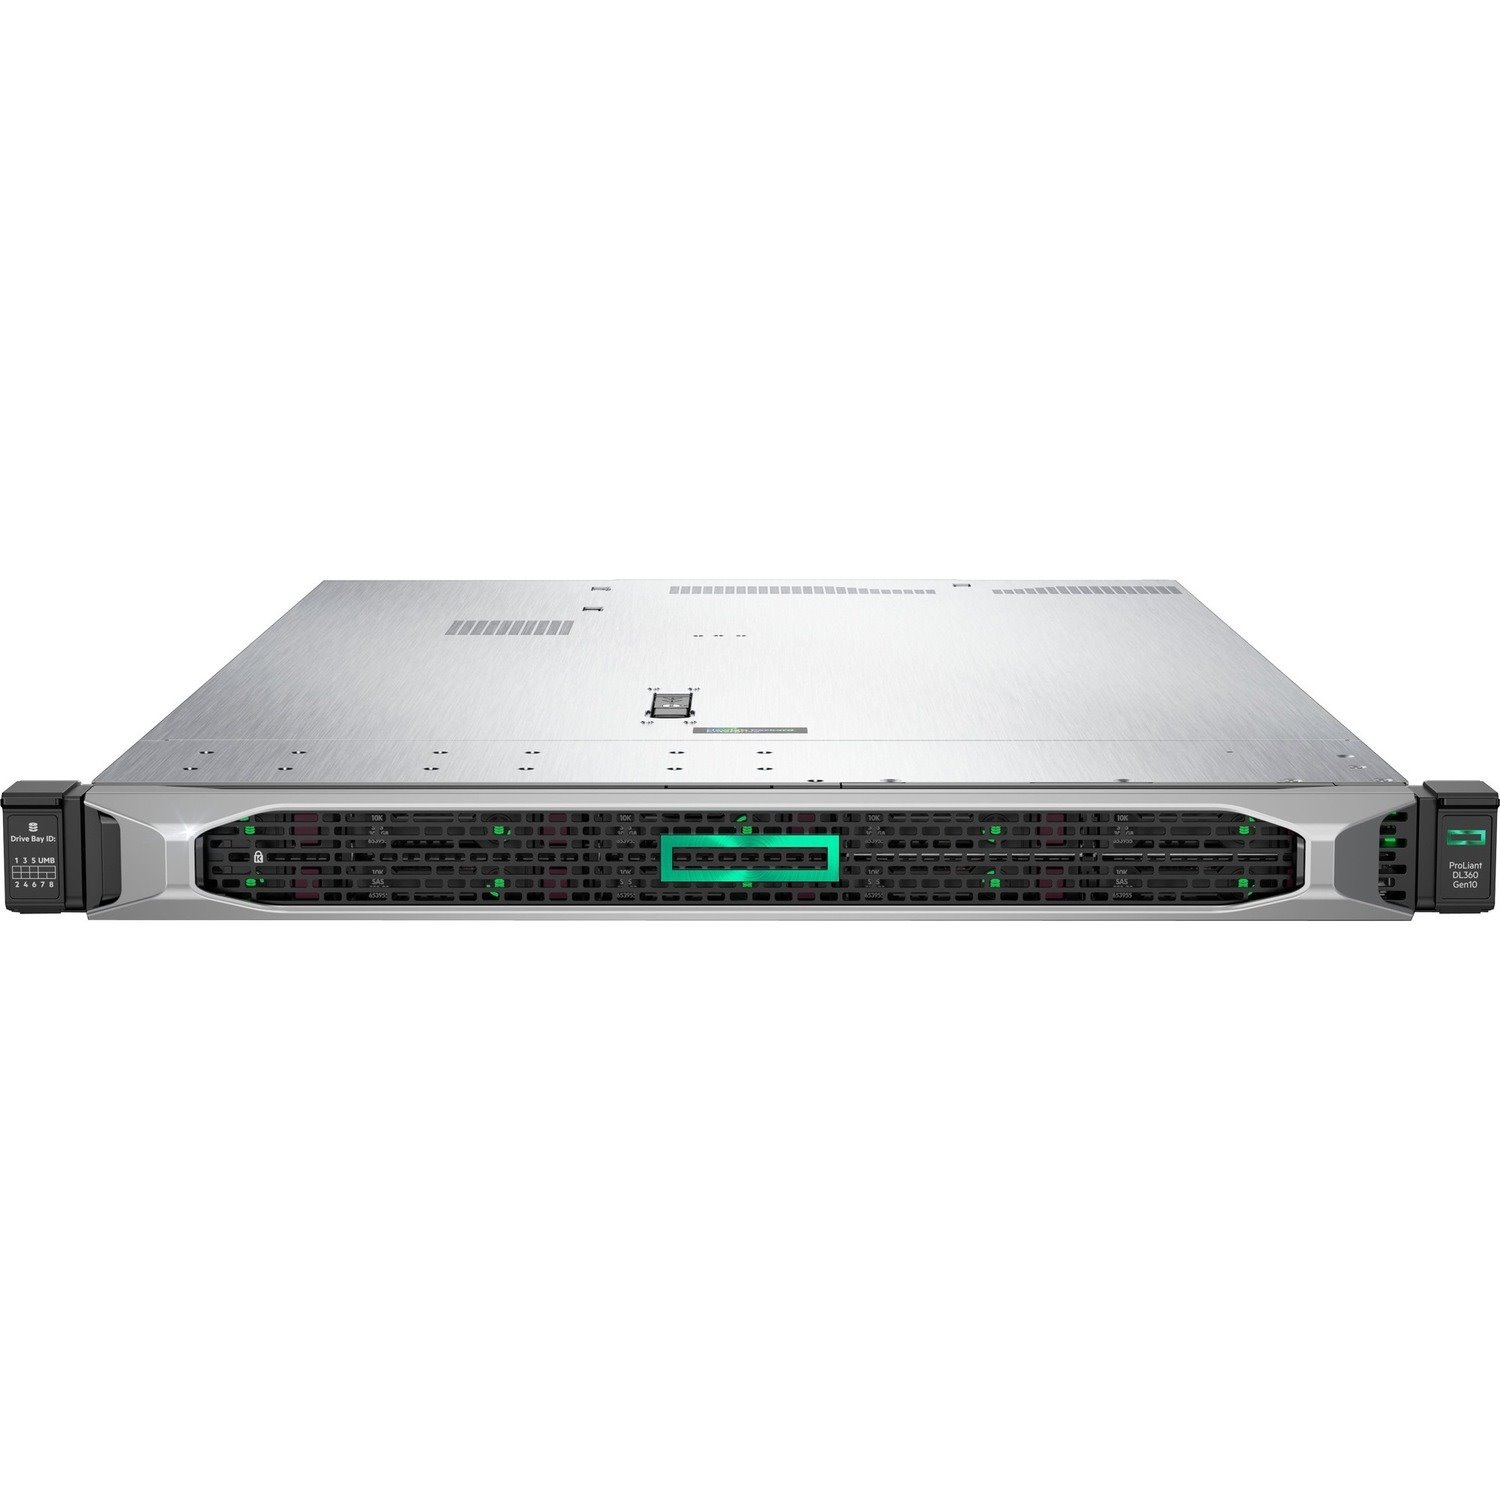 HPE ProLiant DL360 G10 1U Rack Server - 1 x Intel Xeon Gold 6226R 2.90 GHz - 32 GB RAM - Serial ATA, 12Gb/s SAS Controller